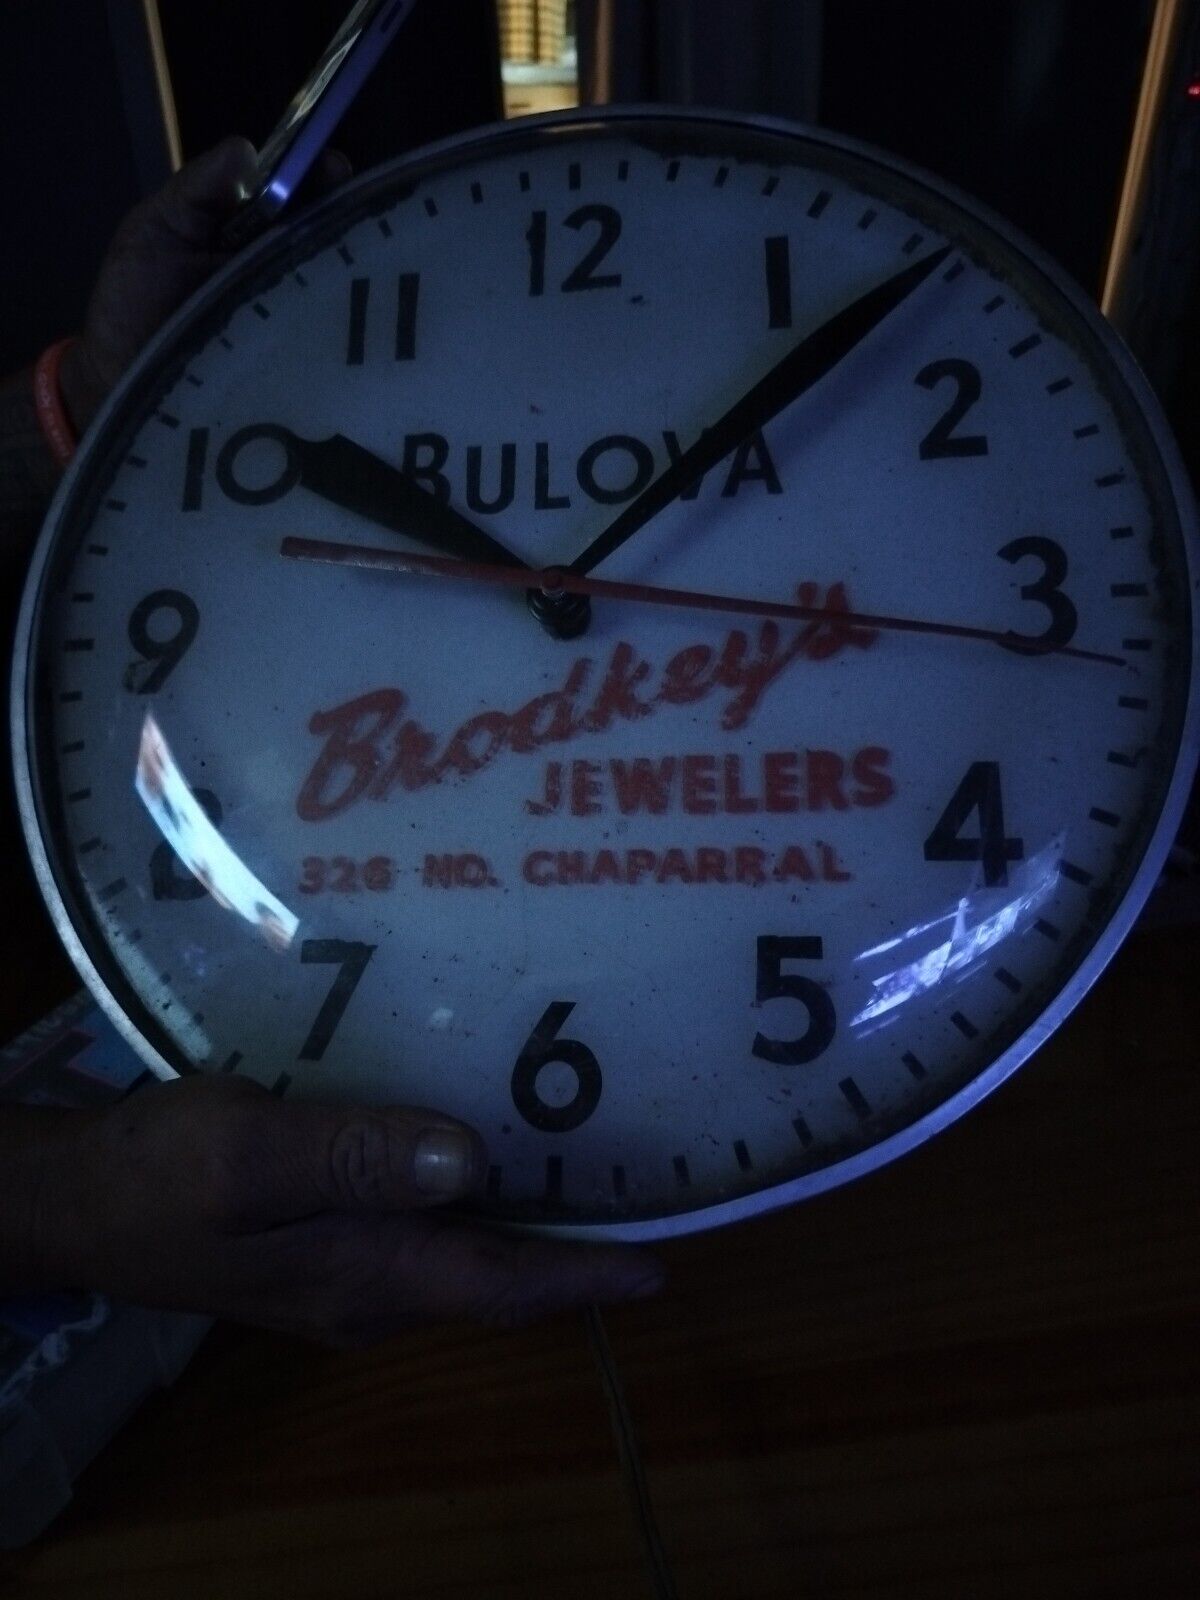 Bulova Brodkeys Jewelers 326 No. Chaparral Wall Clock